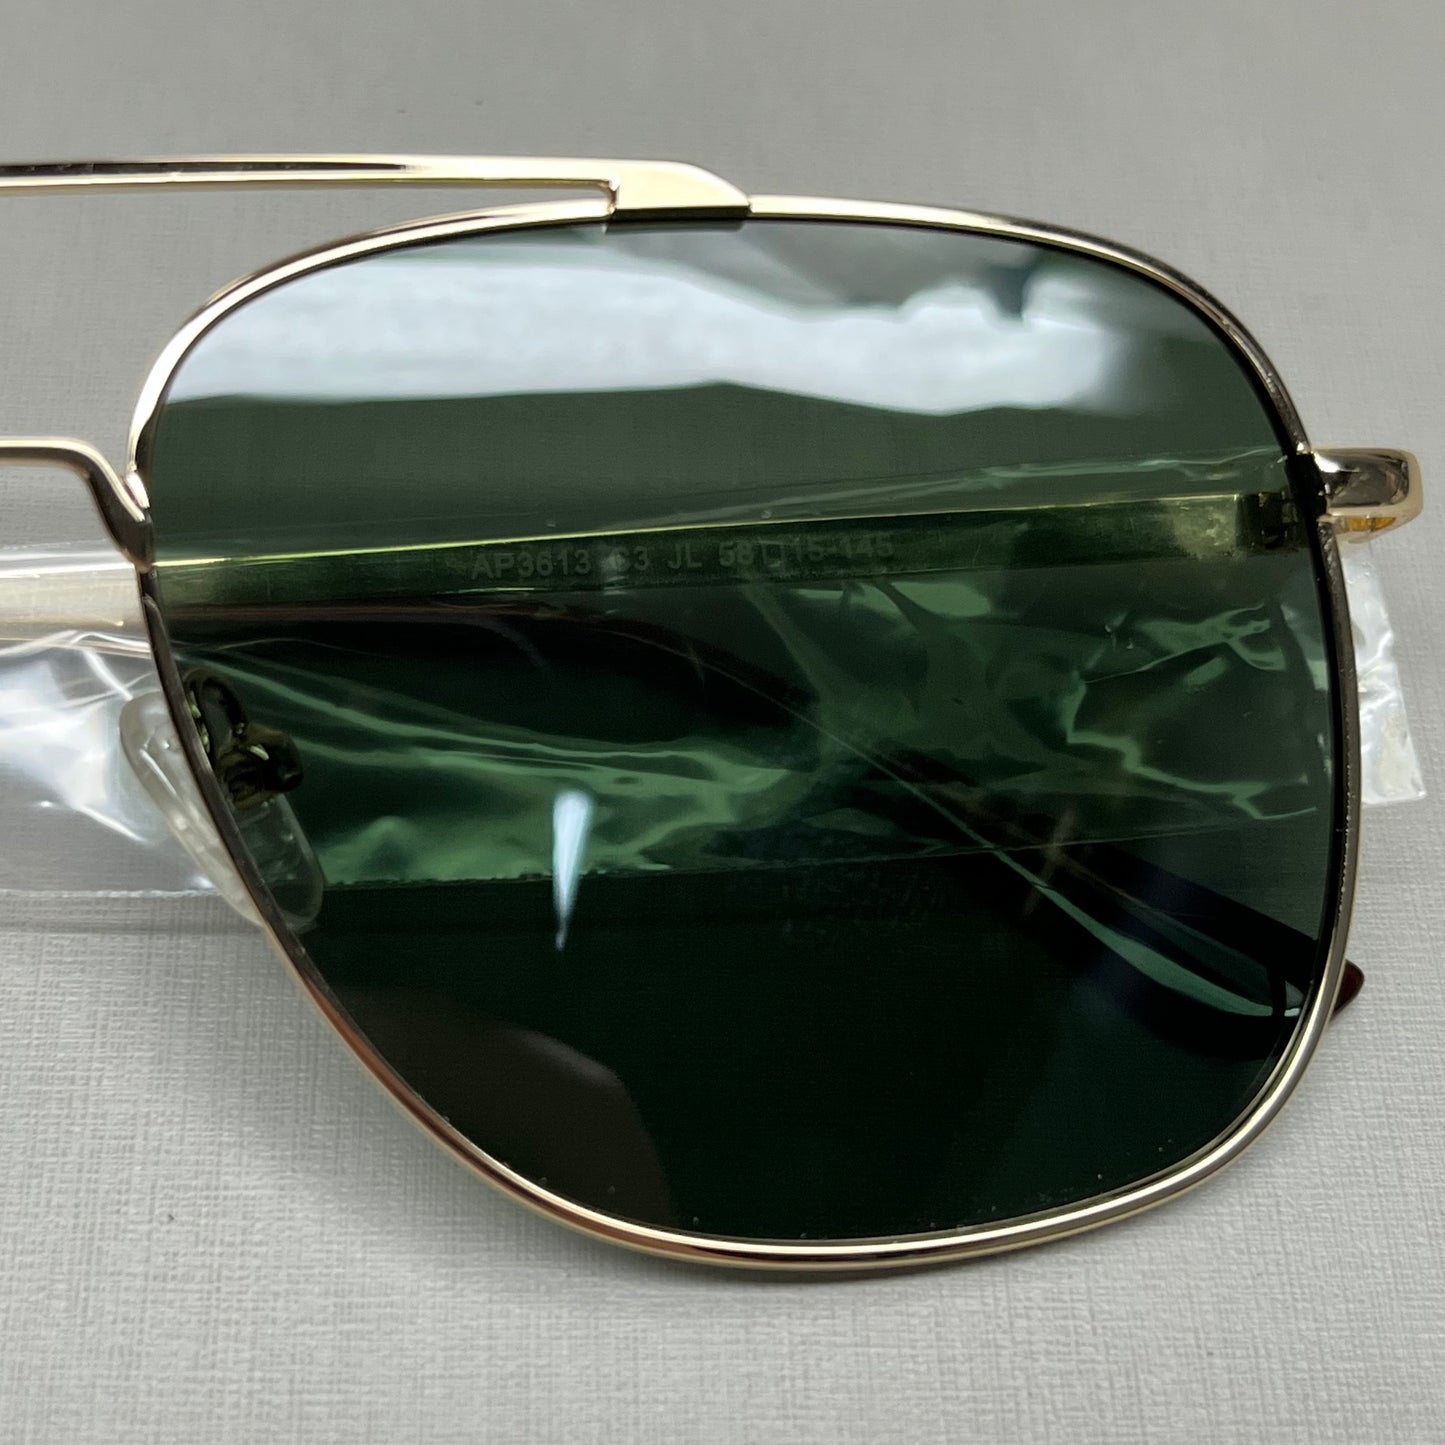 APPASSAL Classic Polarized Aviator Sunglasses AP3613 (New)